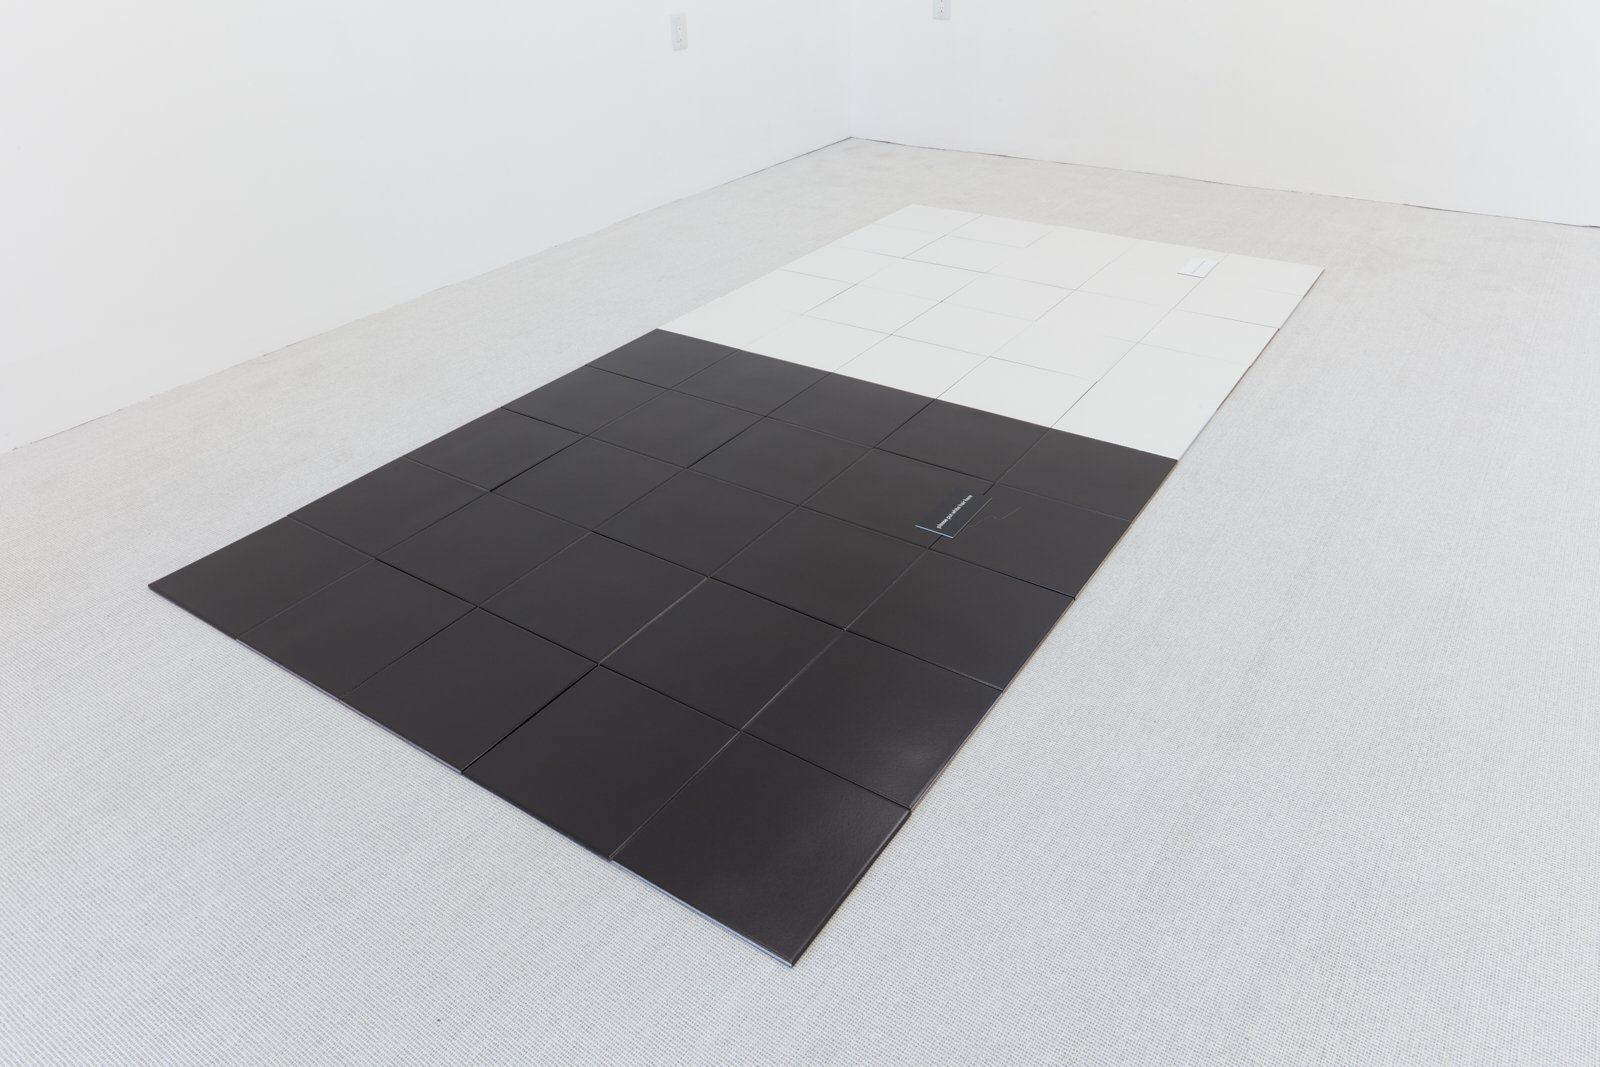  Darren Bader   black tile; white tile  